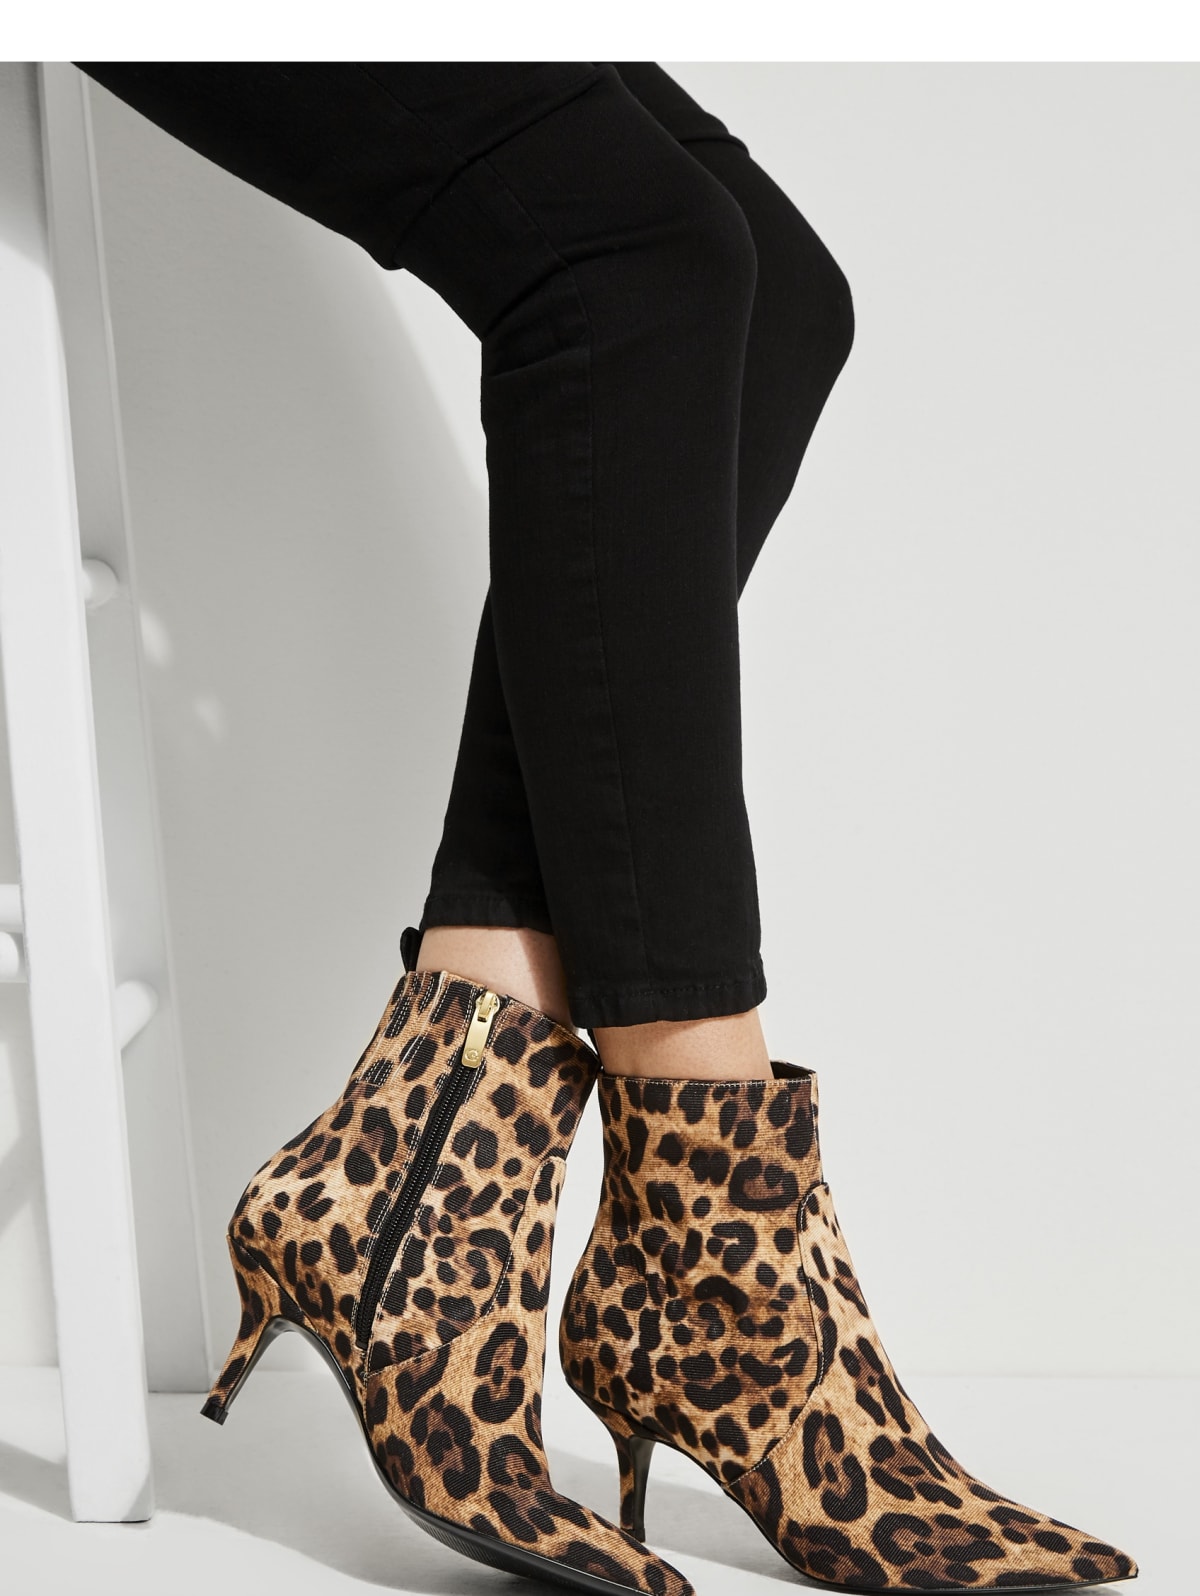 guess leopard boots